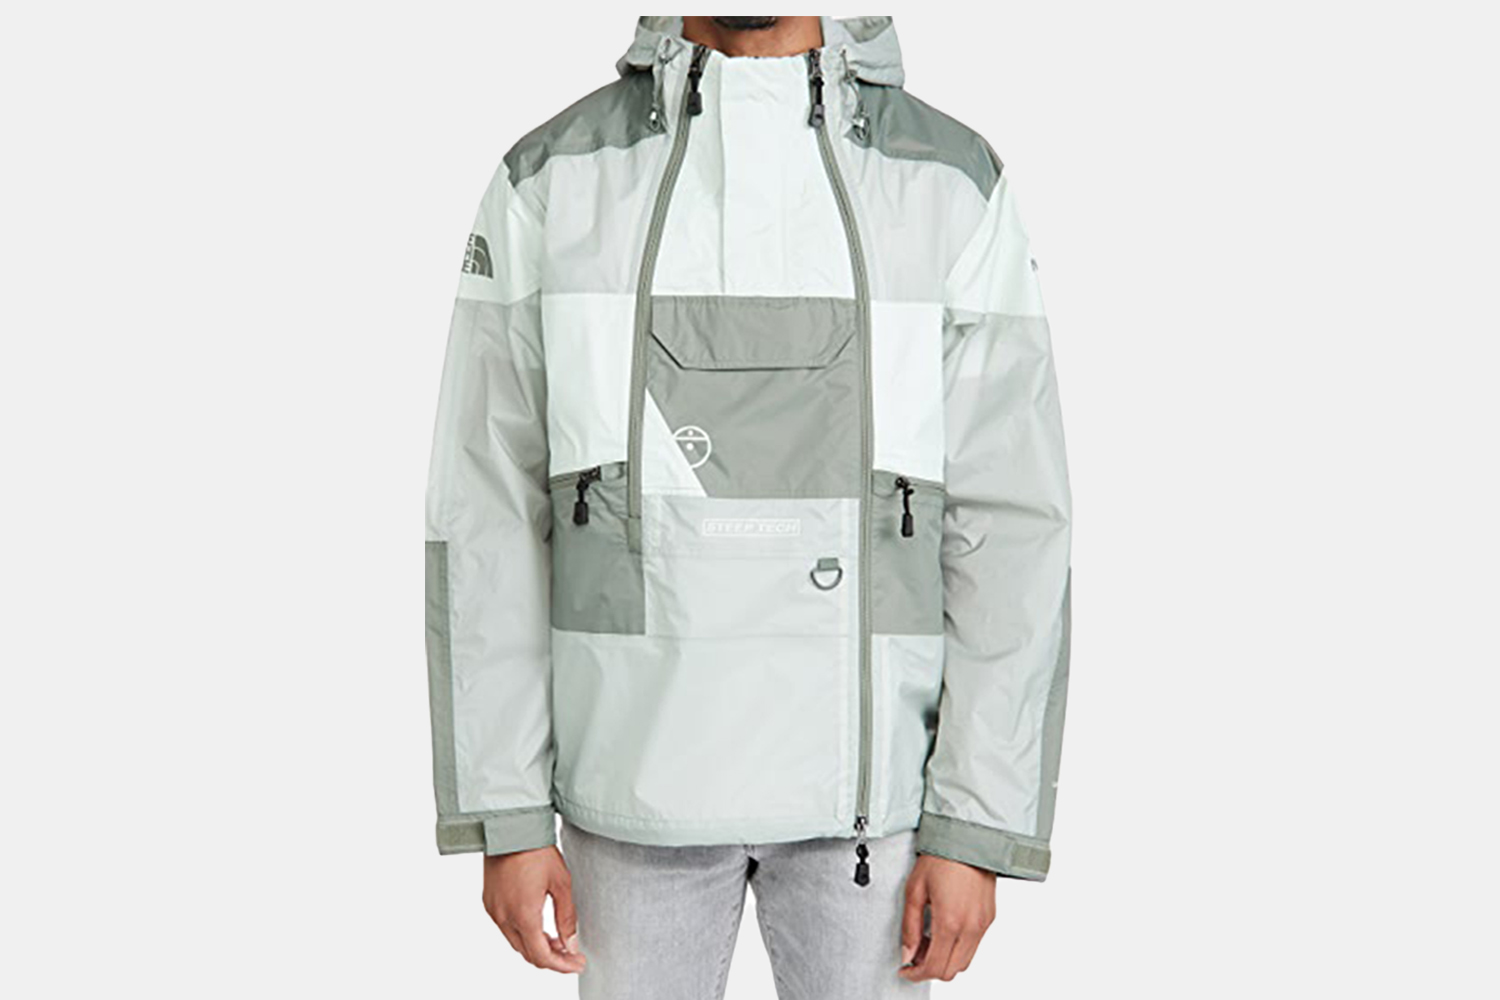 a grey patterned rain jacket.